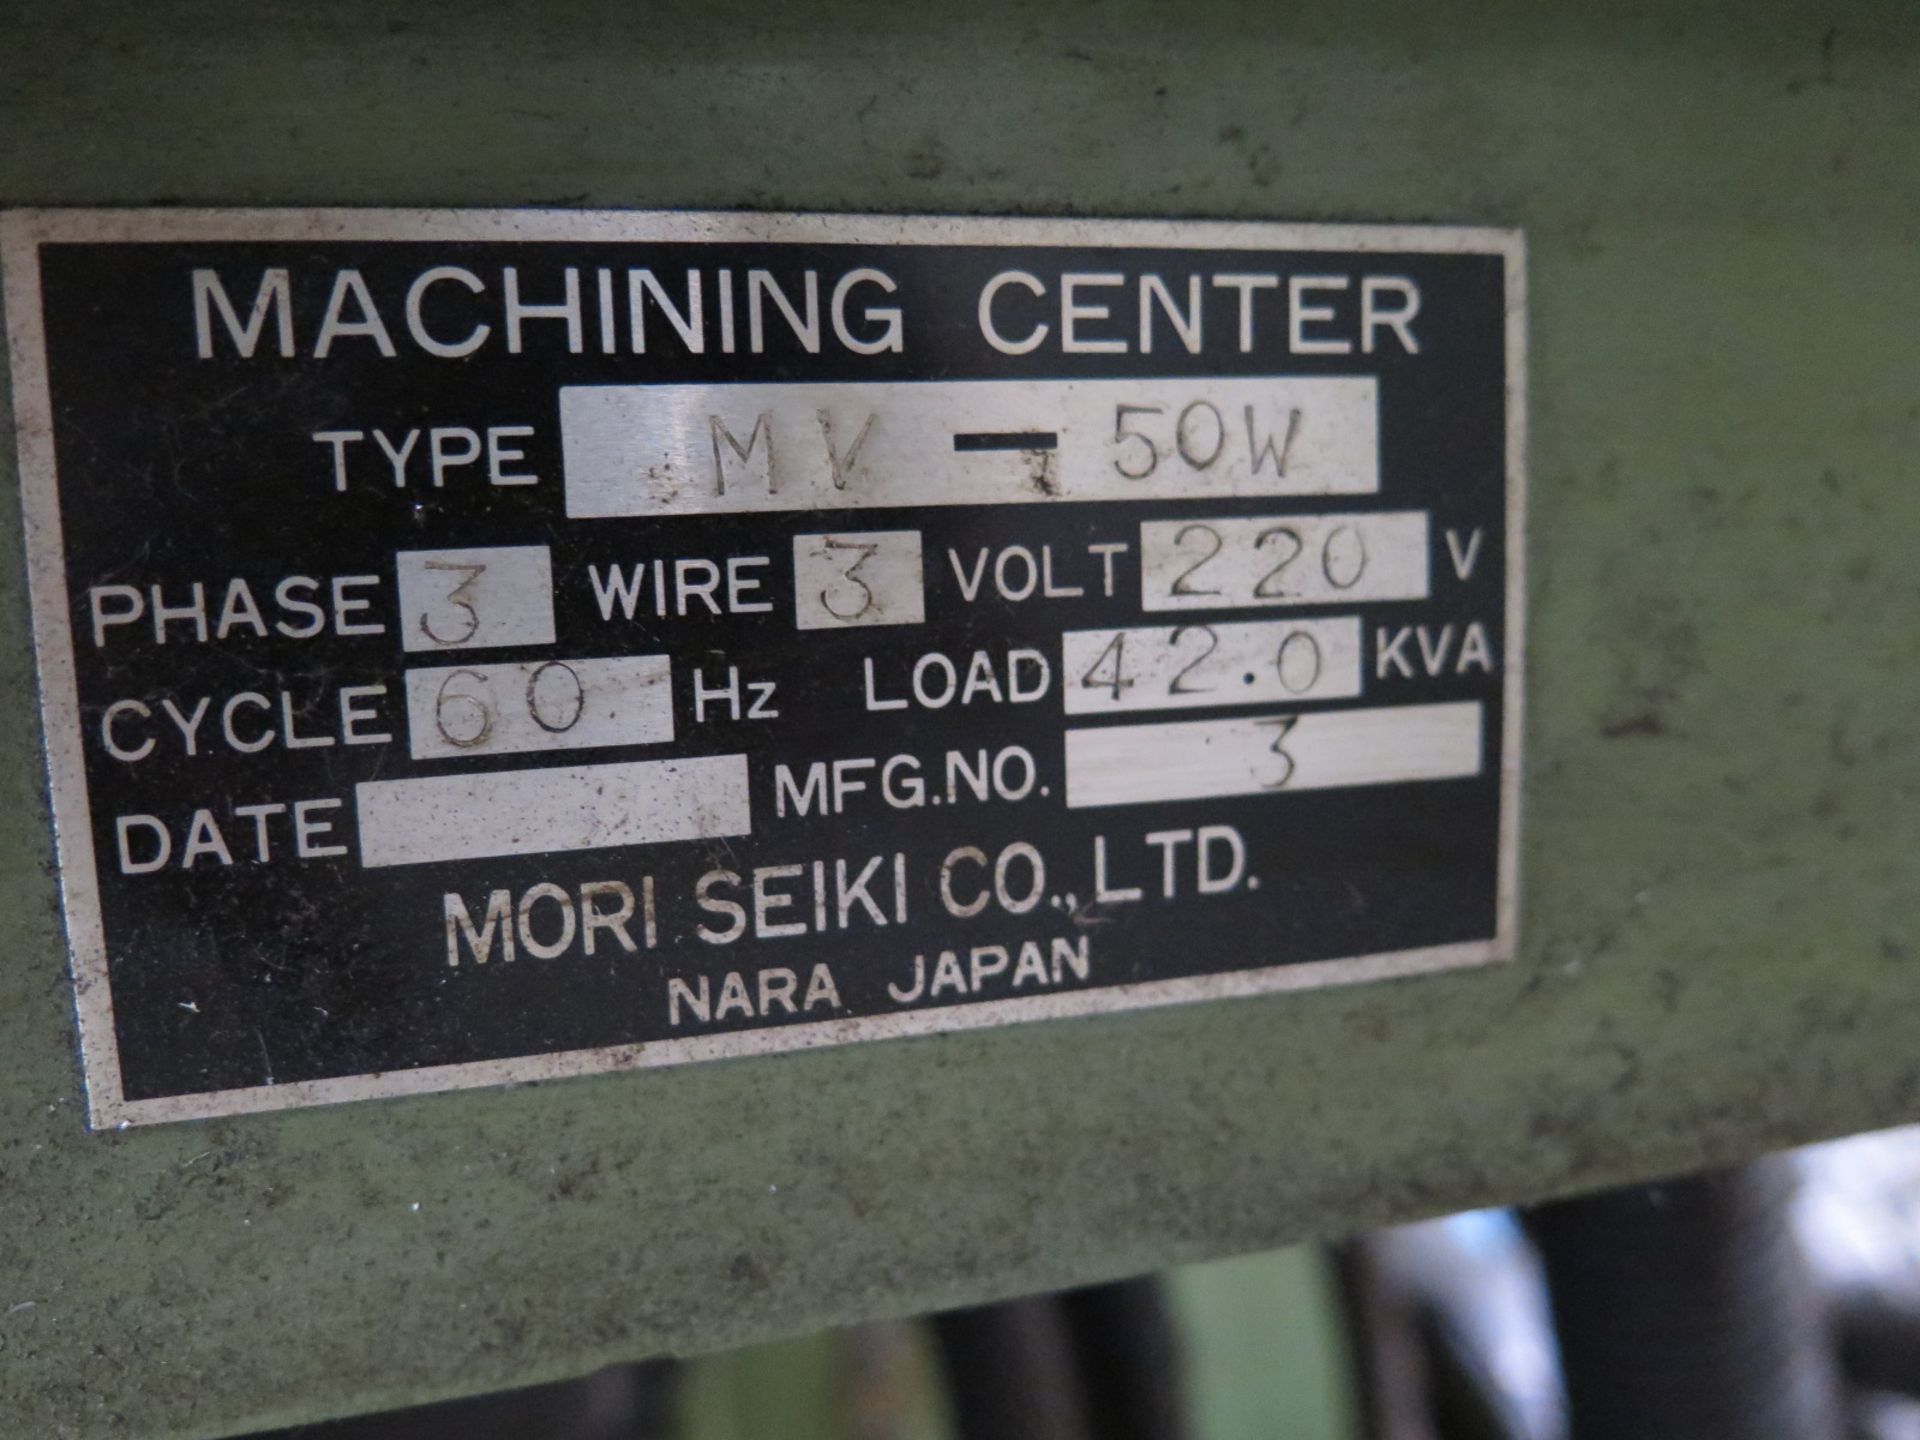 Mori Seiki MV-50W CNC Vertical Machining Center s/n 3 w/ Fanuc System 6-M Controls, 32-Station ATC, - Image 8 of 8